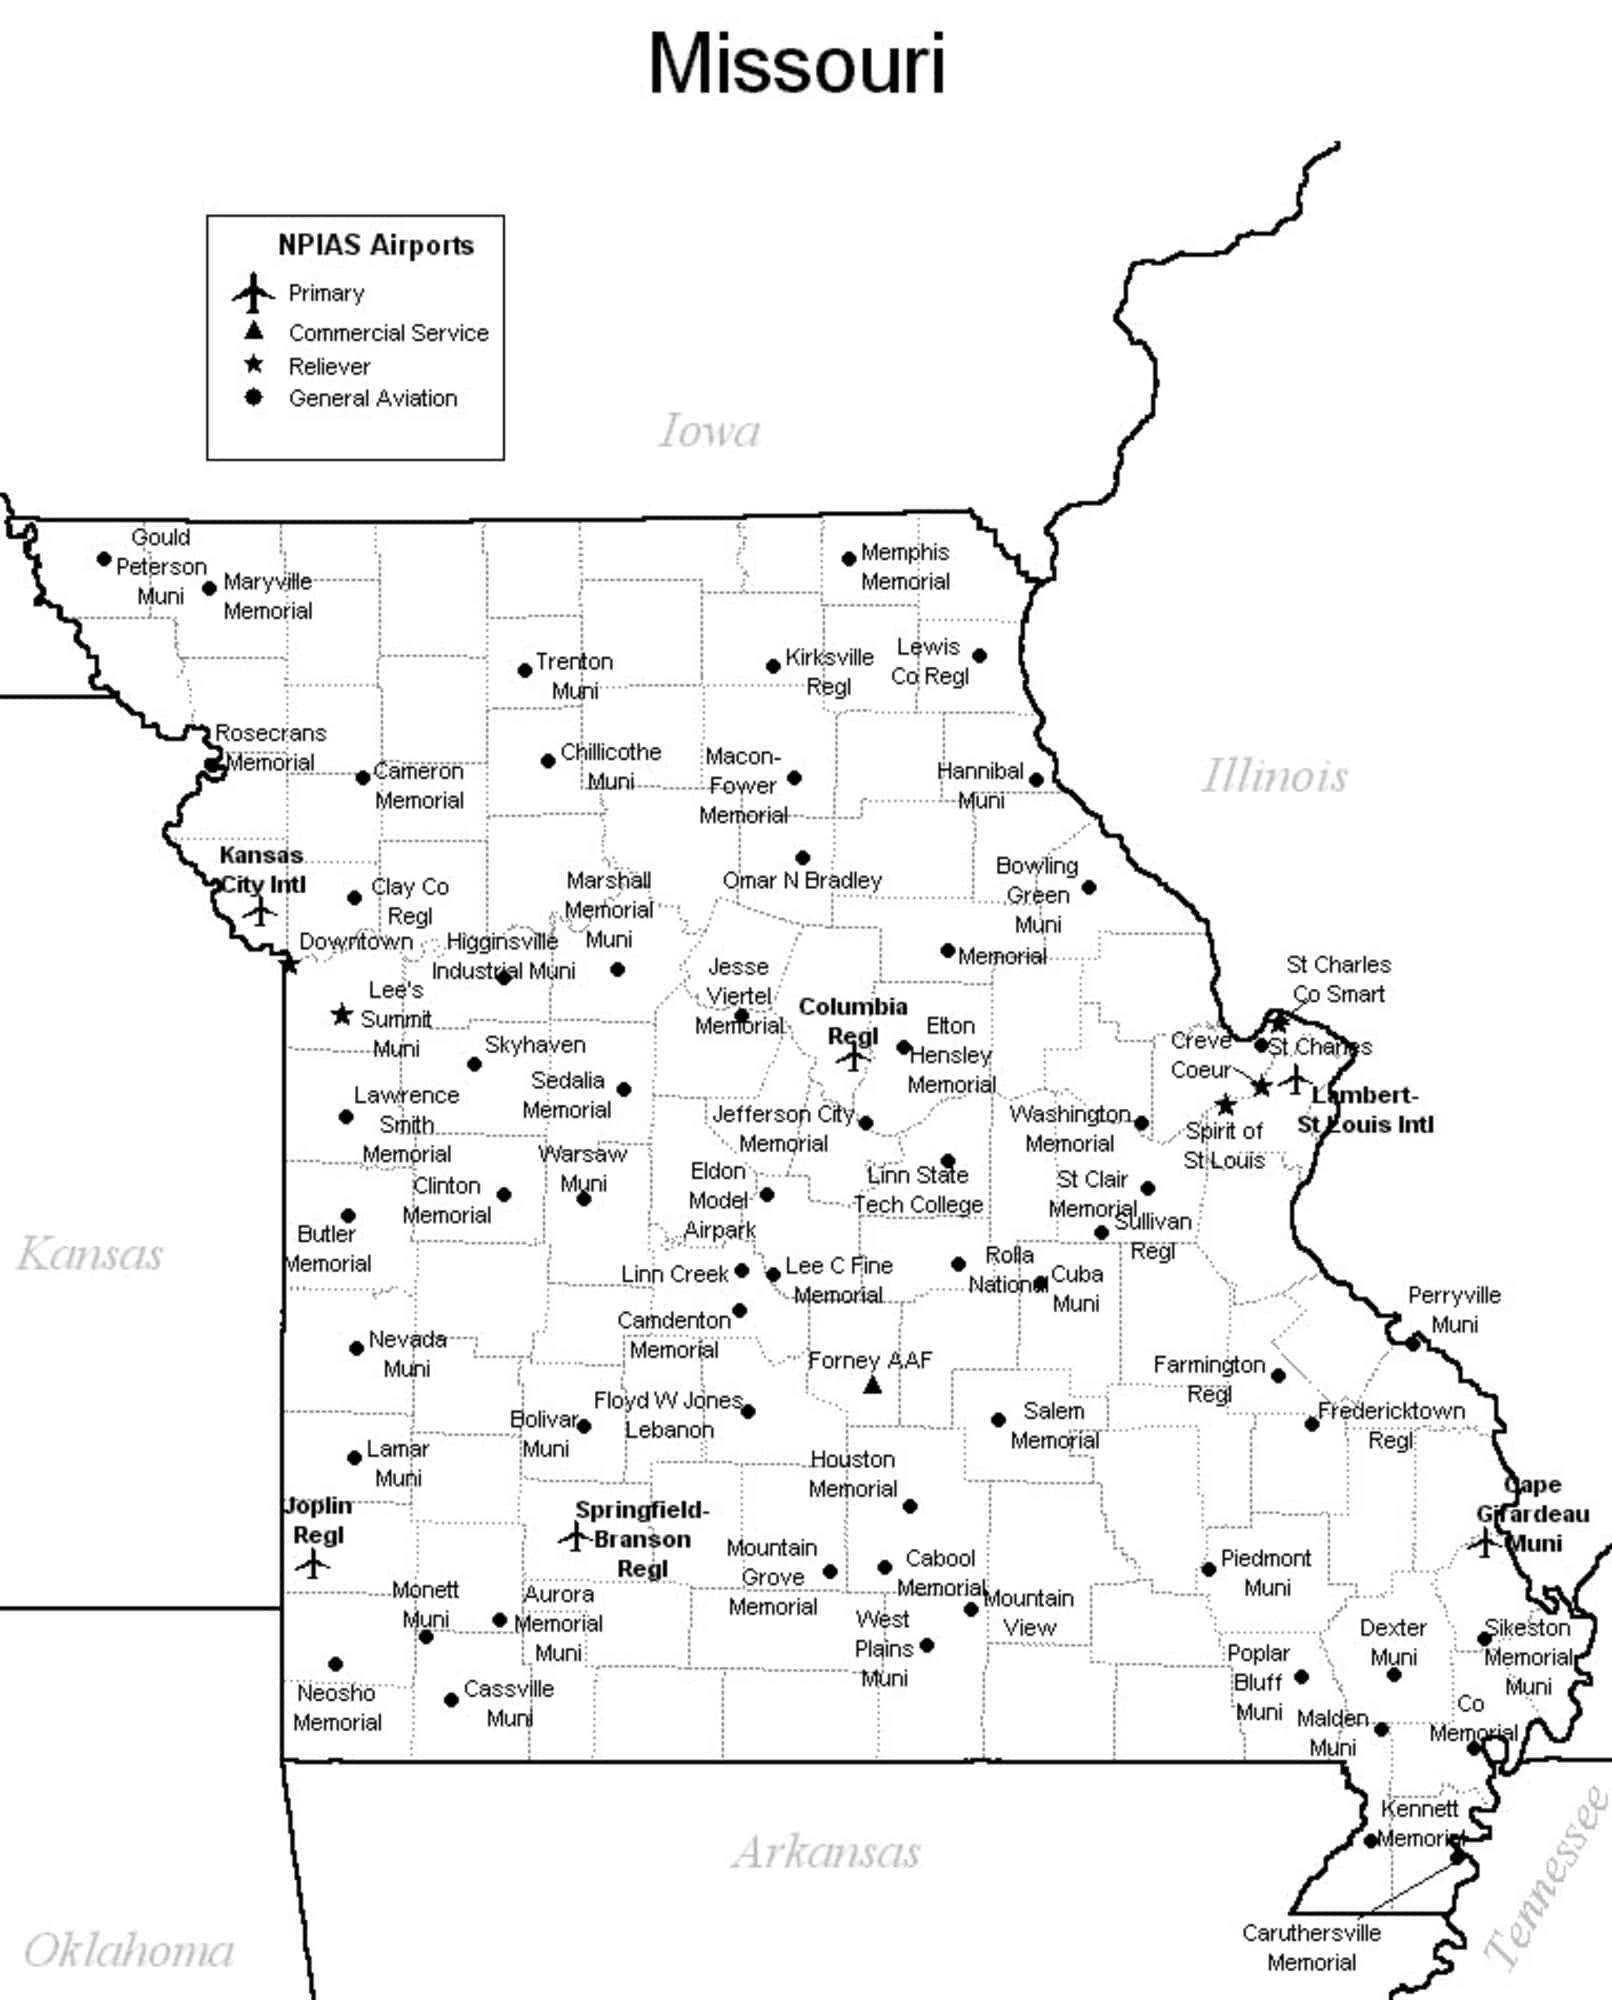 Missouri Airport Map Missouri Airports